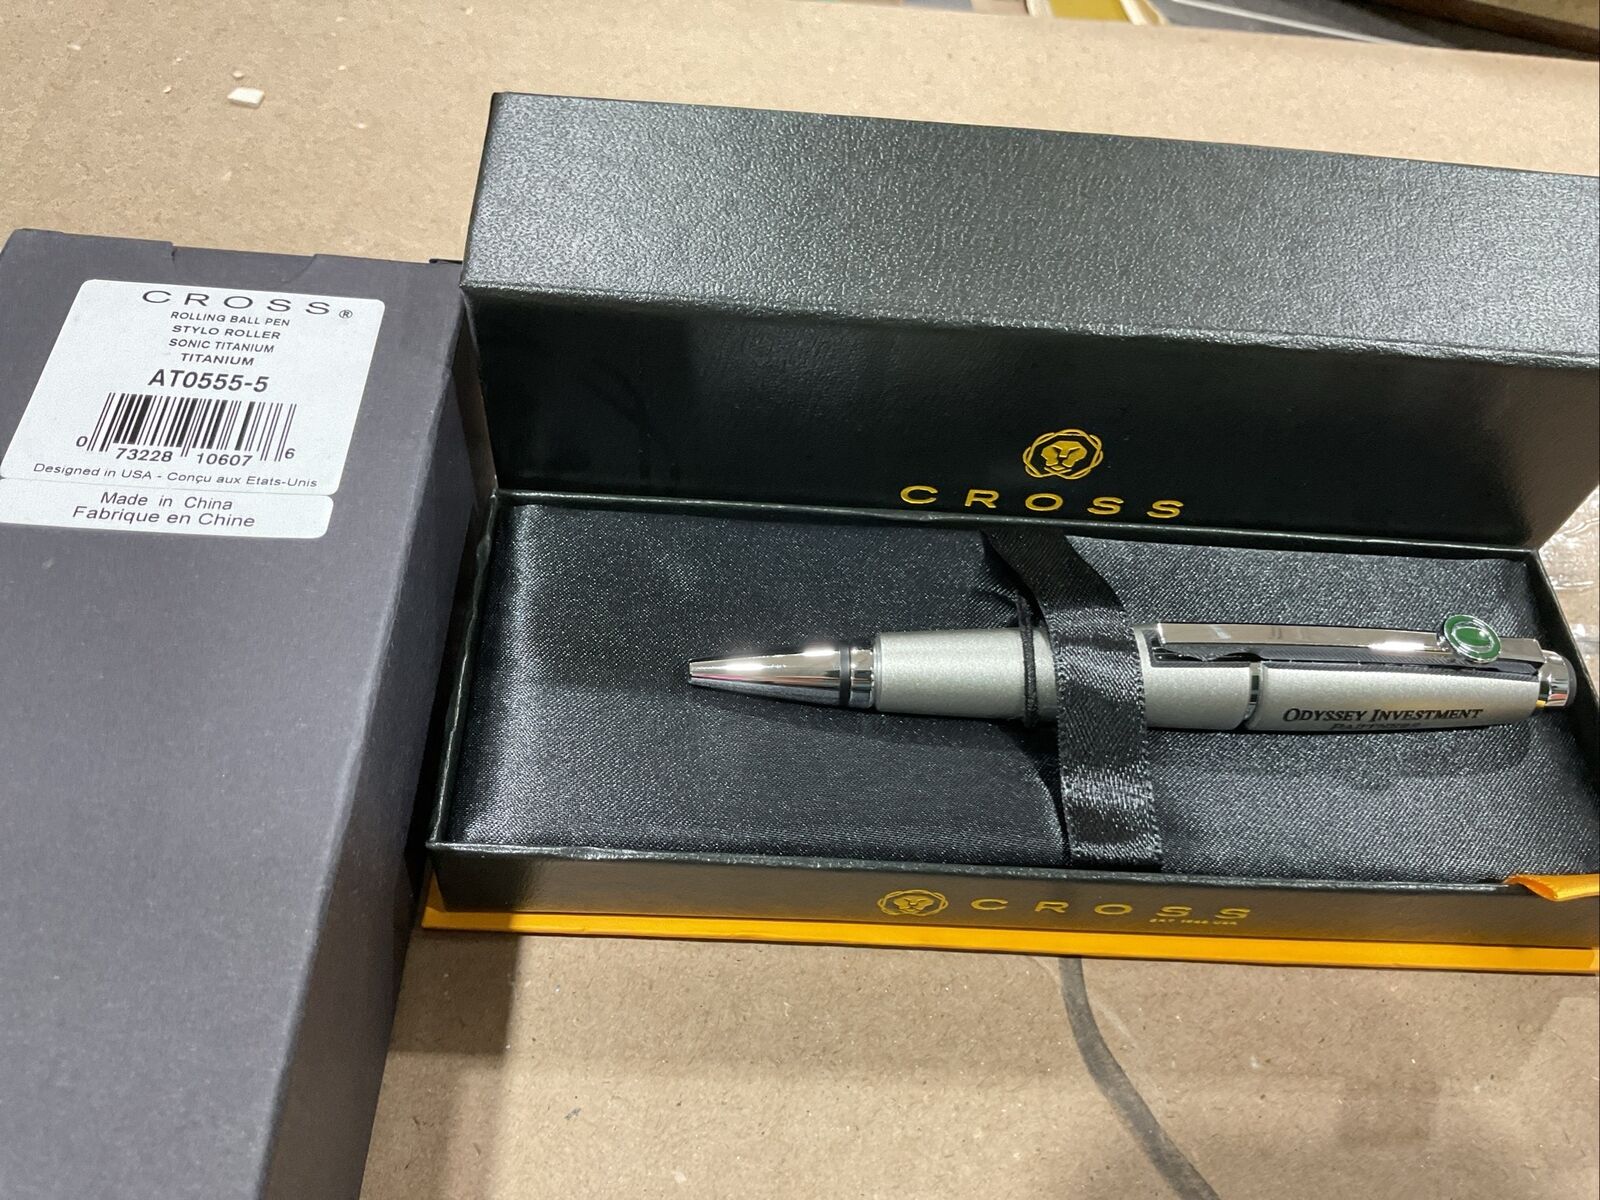 Cross Edge AT0555-5 Branded Sonic Titanium Rollerball Gel Pen New in Box